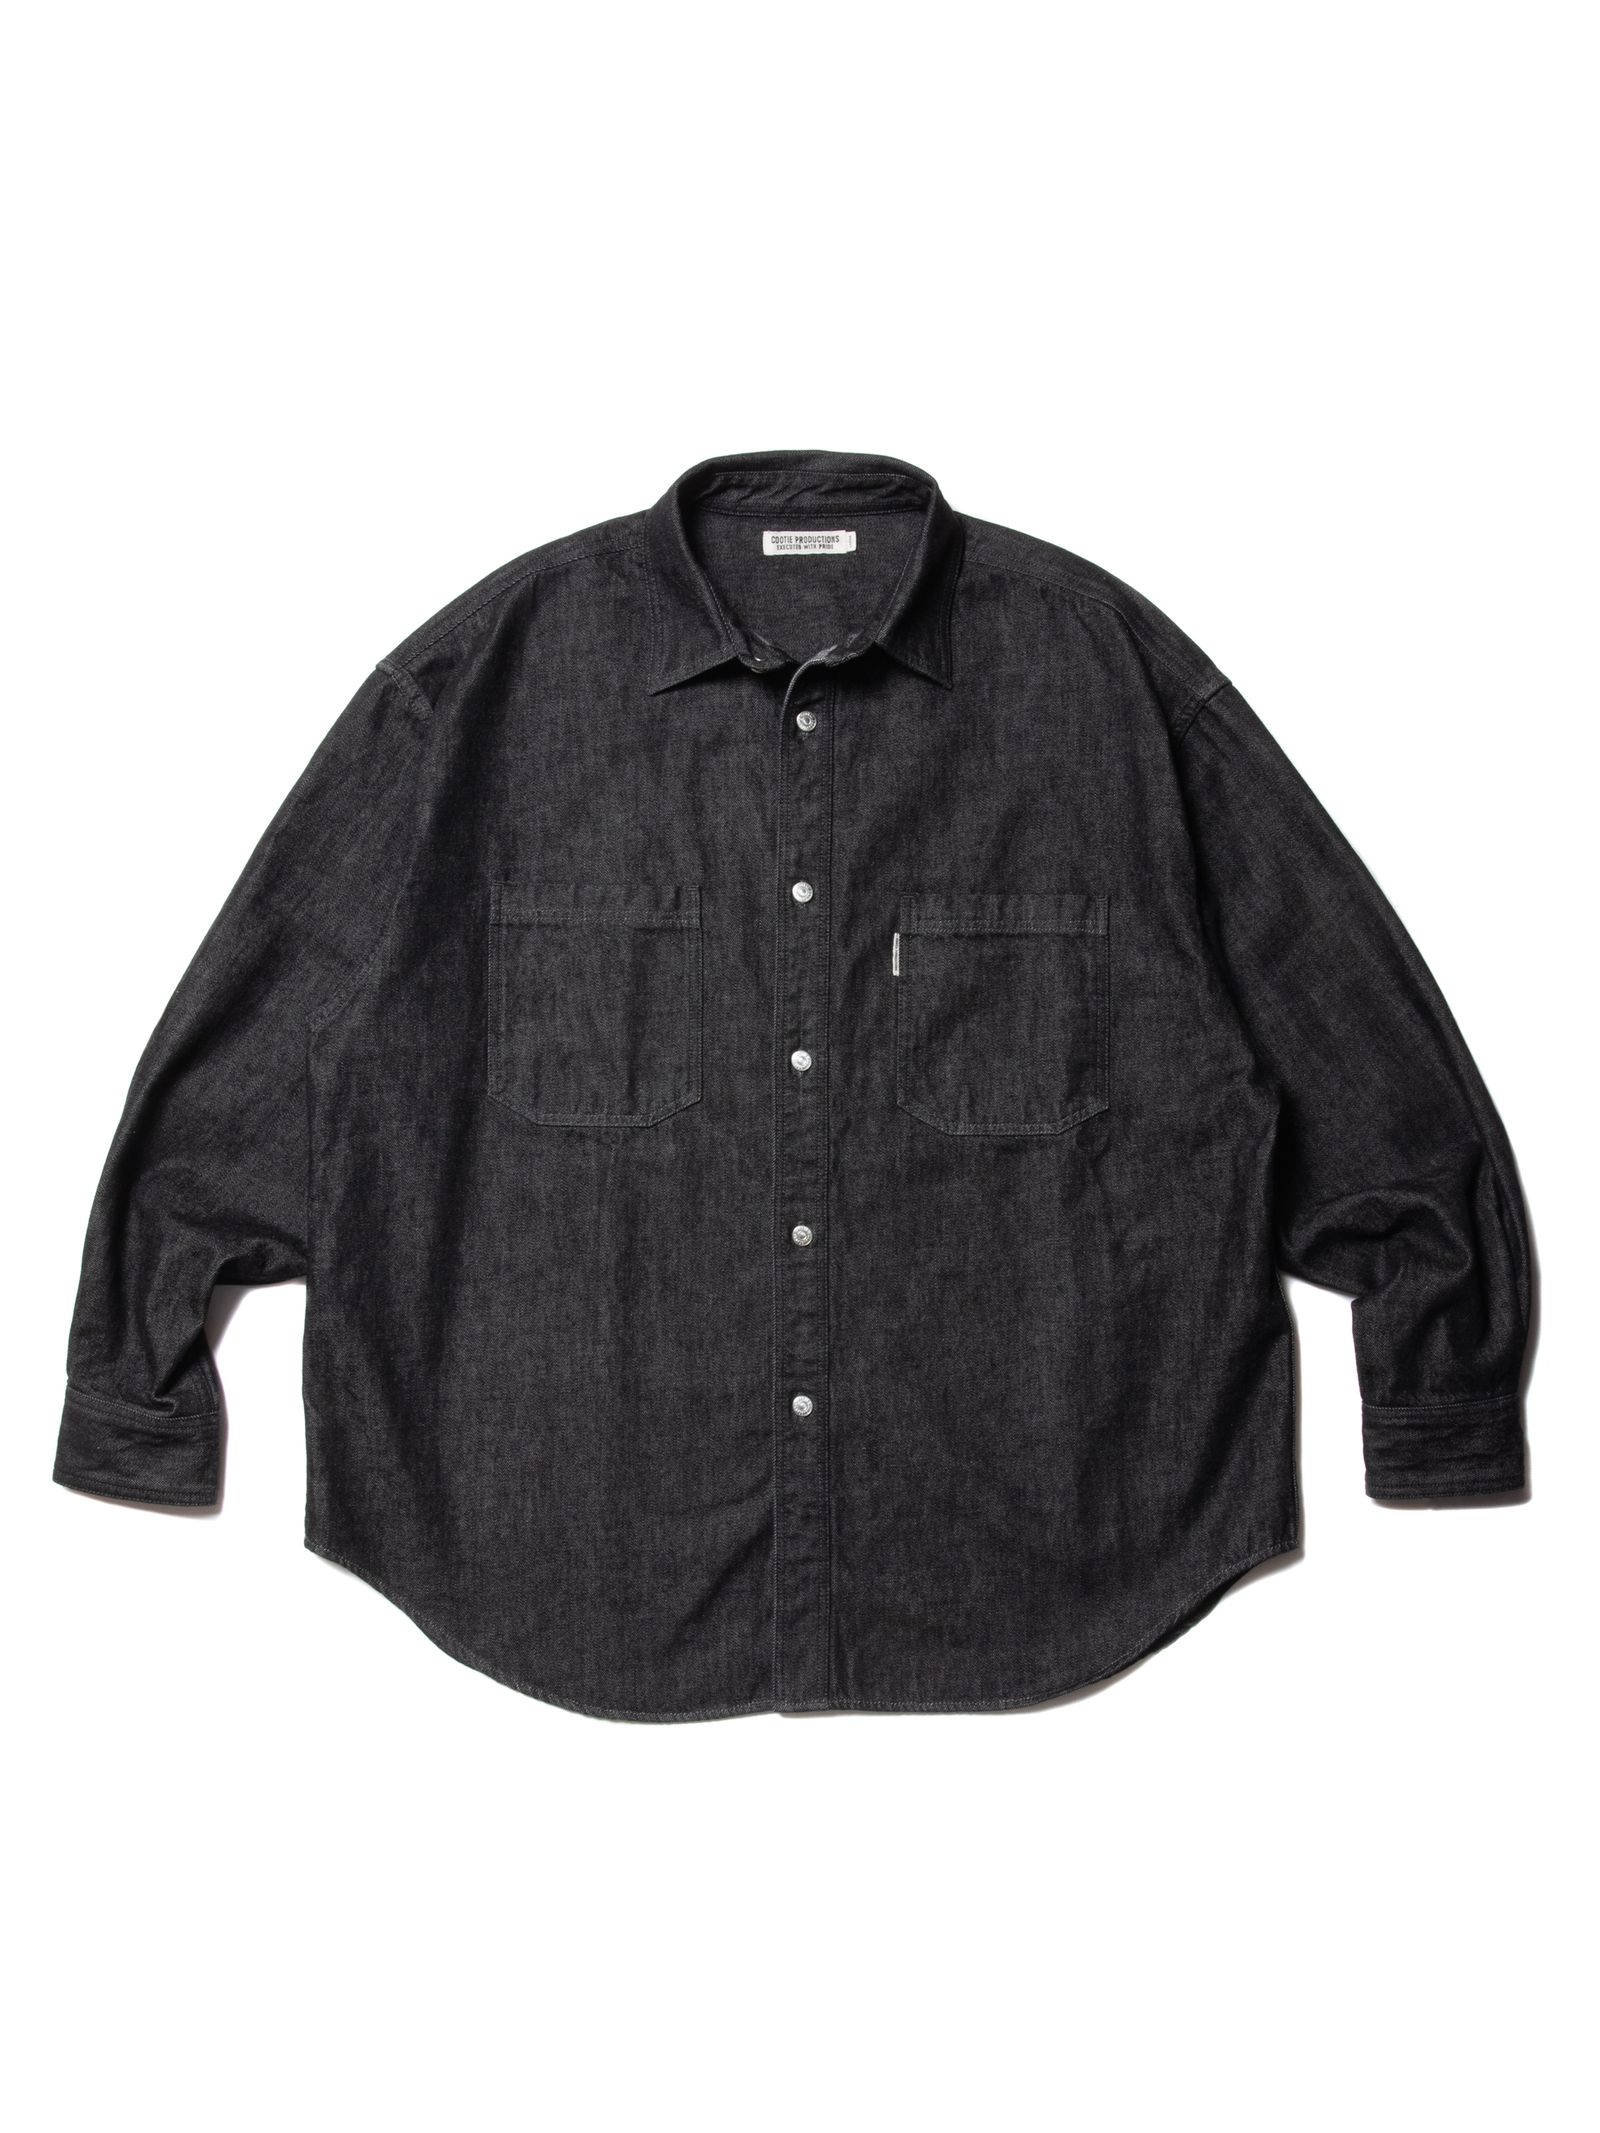 comesense work shirt  black